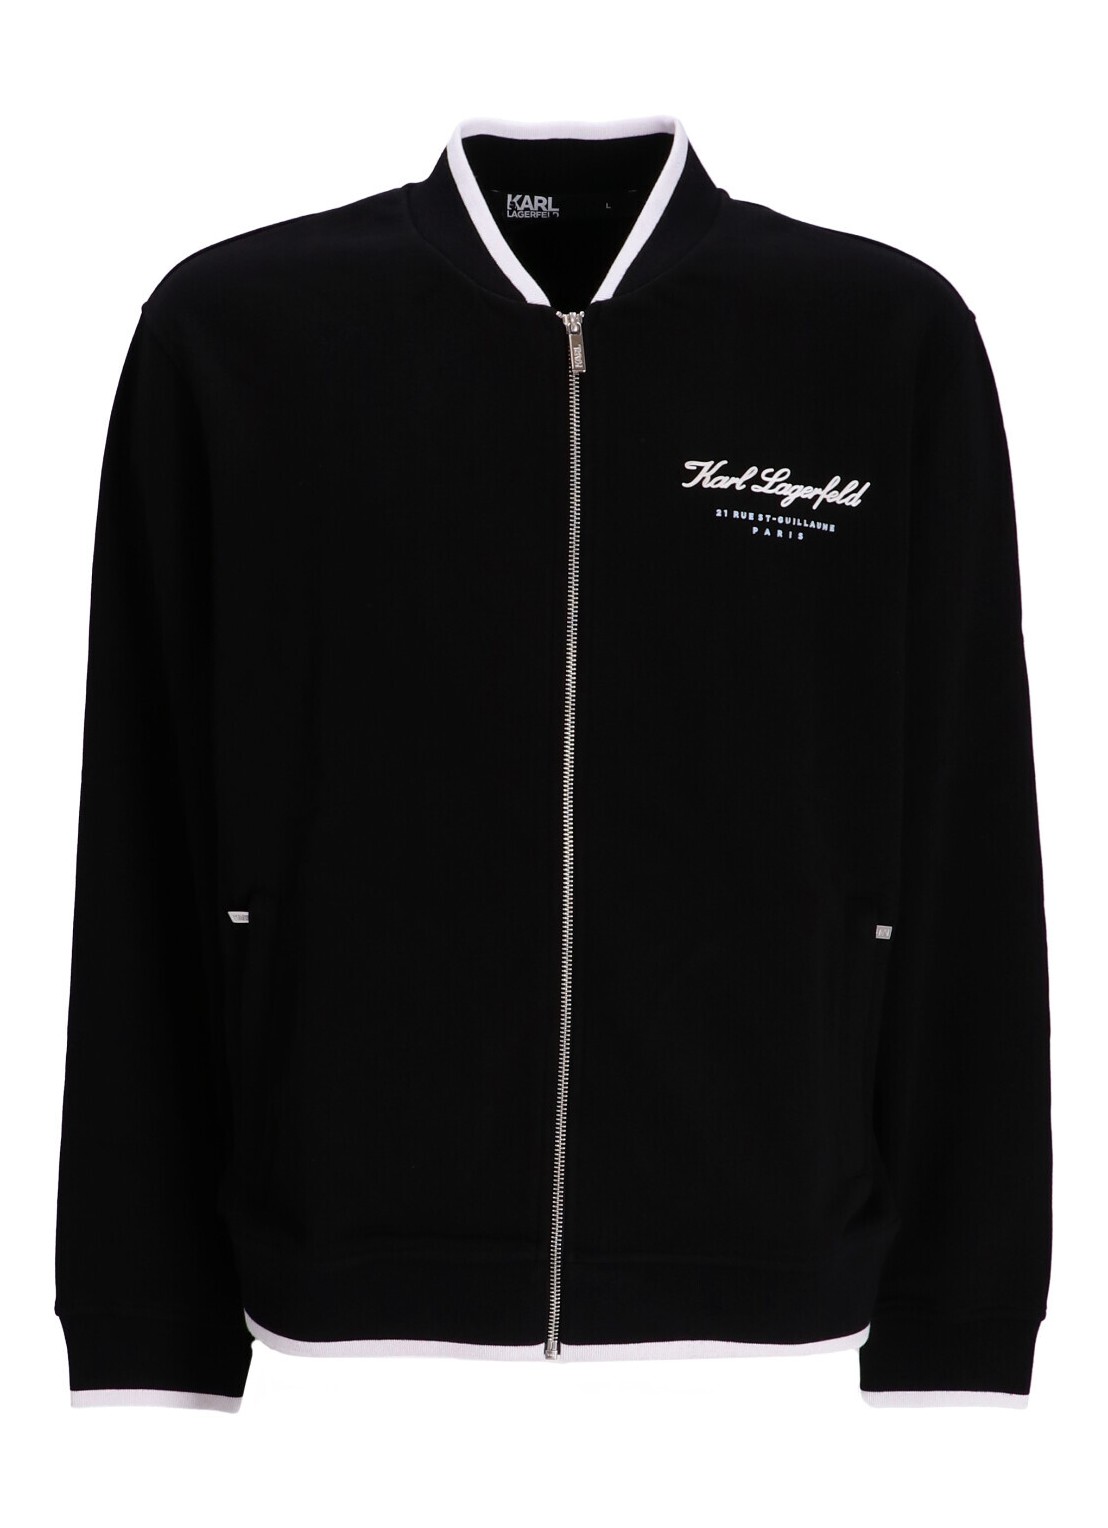 Sudadera karl lagerfeld sweater man sweat zip jacket 705410541900 990 talla negro
 